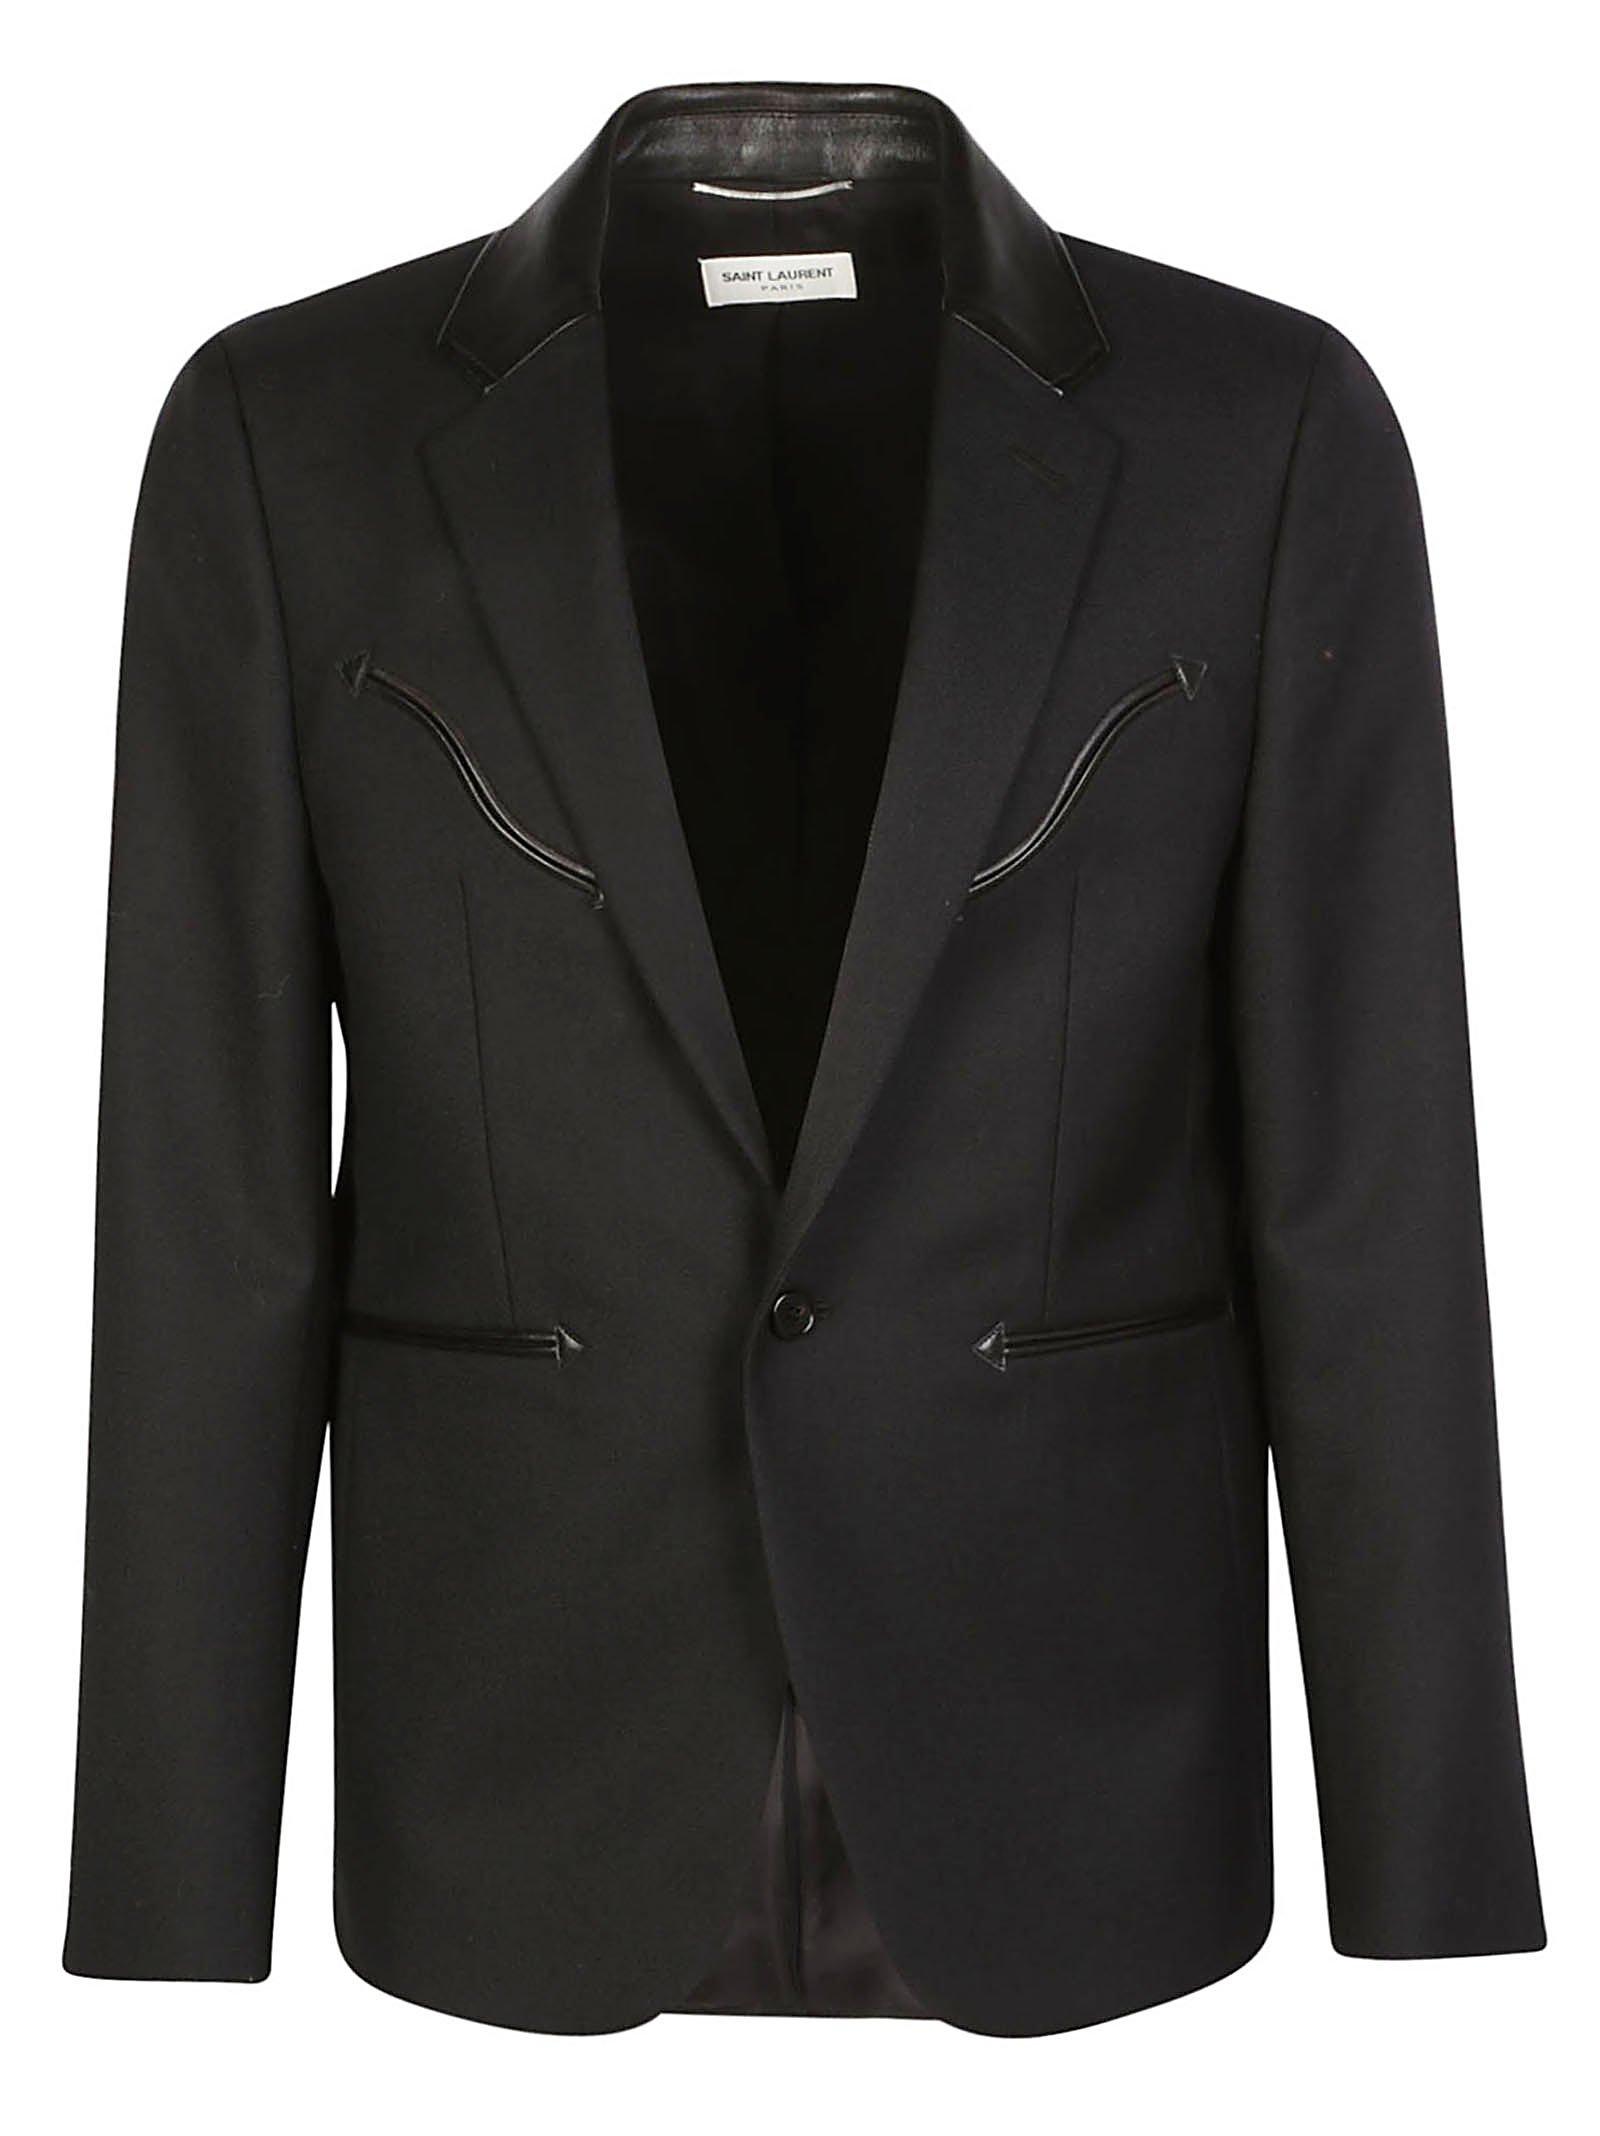 Saint Laurent Leather Detail Blazer in Black for Men - Lyst